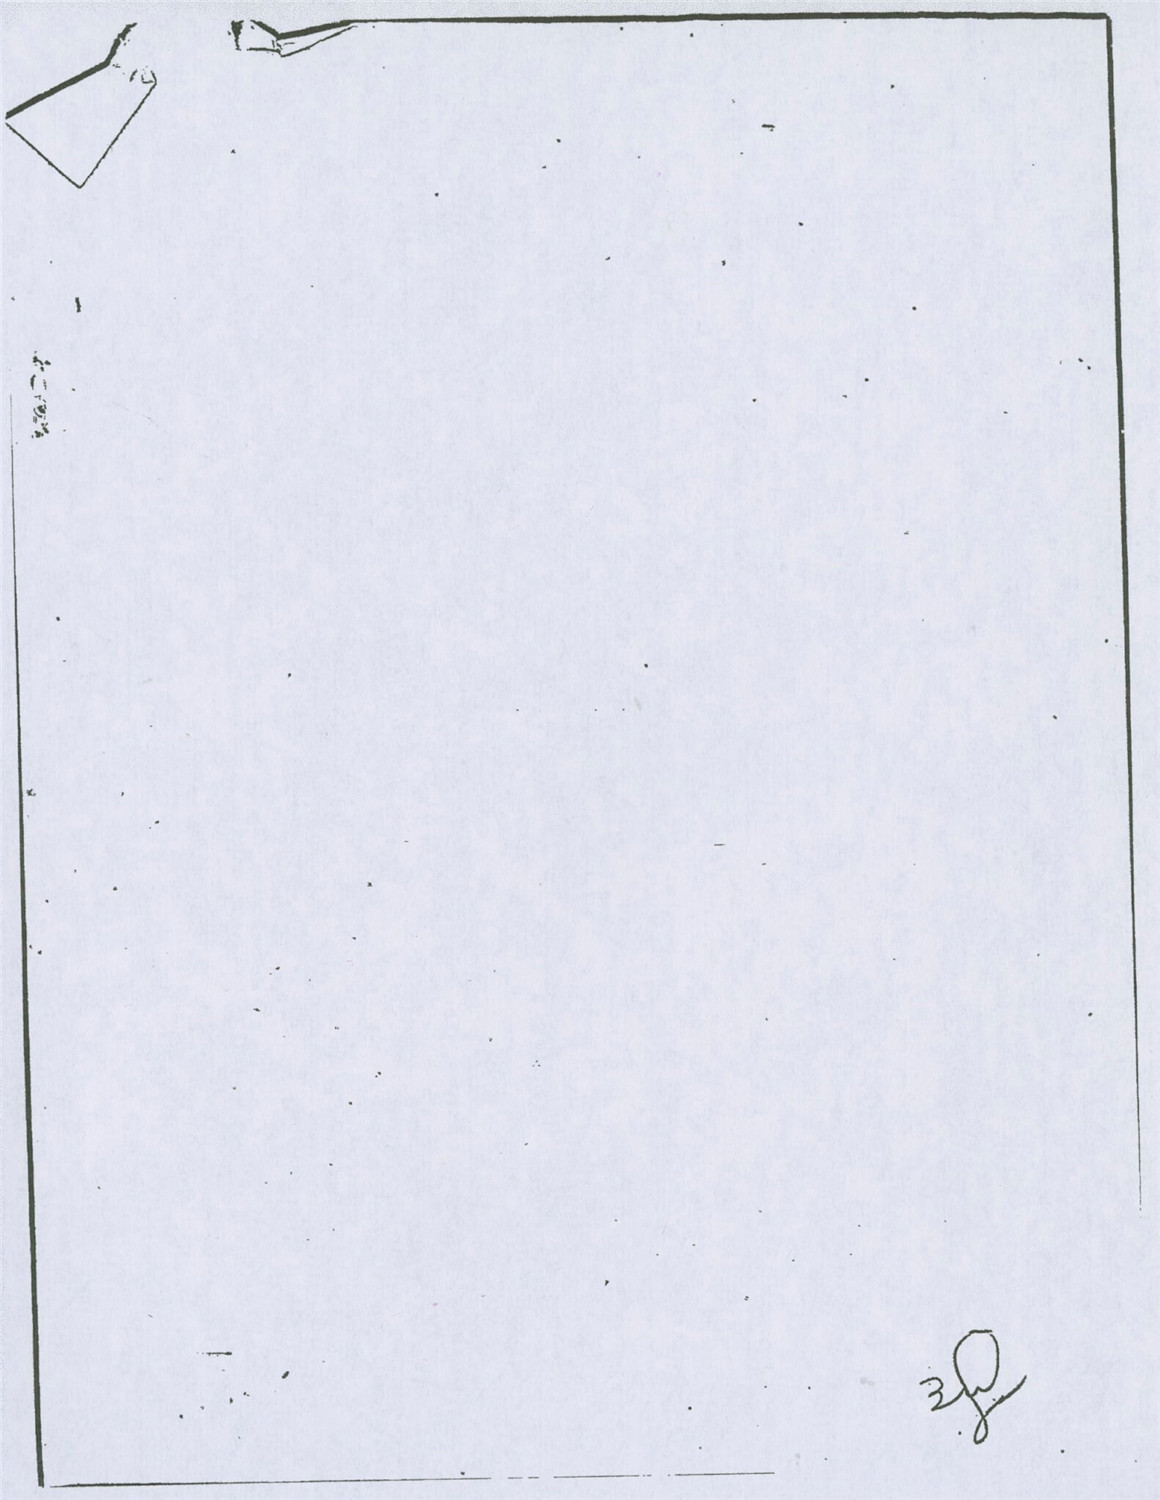 BLKMARKET 75个高分辨率黑白文件影印纸张标签背景设计纹理 TRASH SCANS 图片素材 第4张